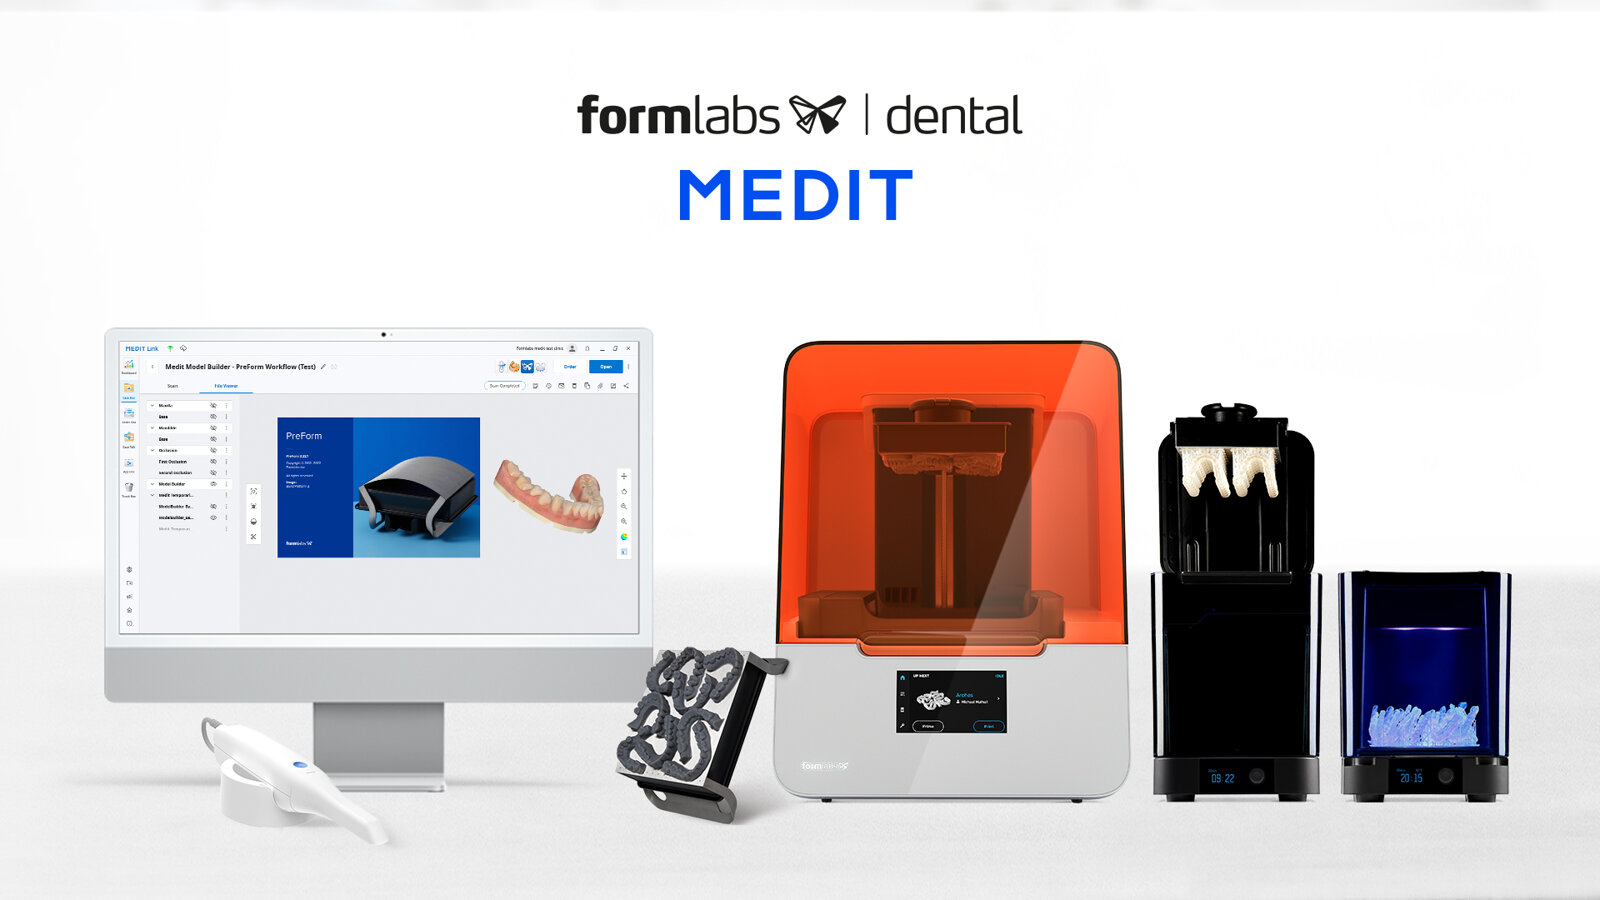 Formlabs Dental and Medit partner to streamline chairside 3D printing
